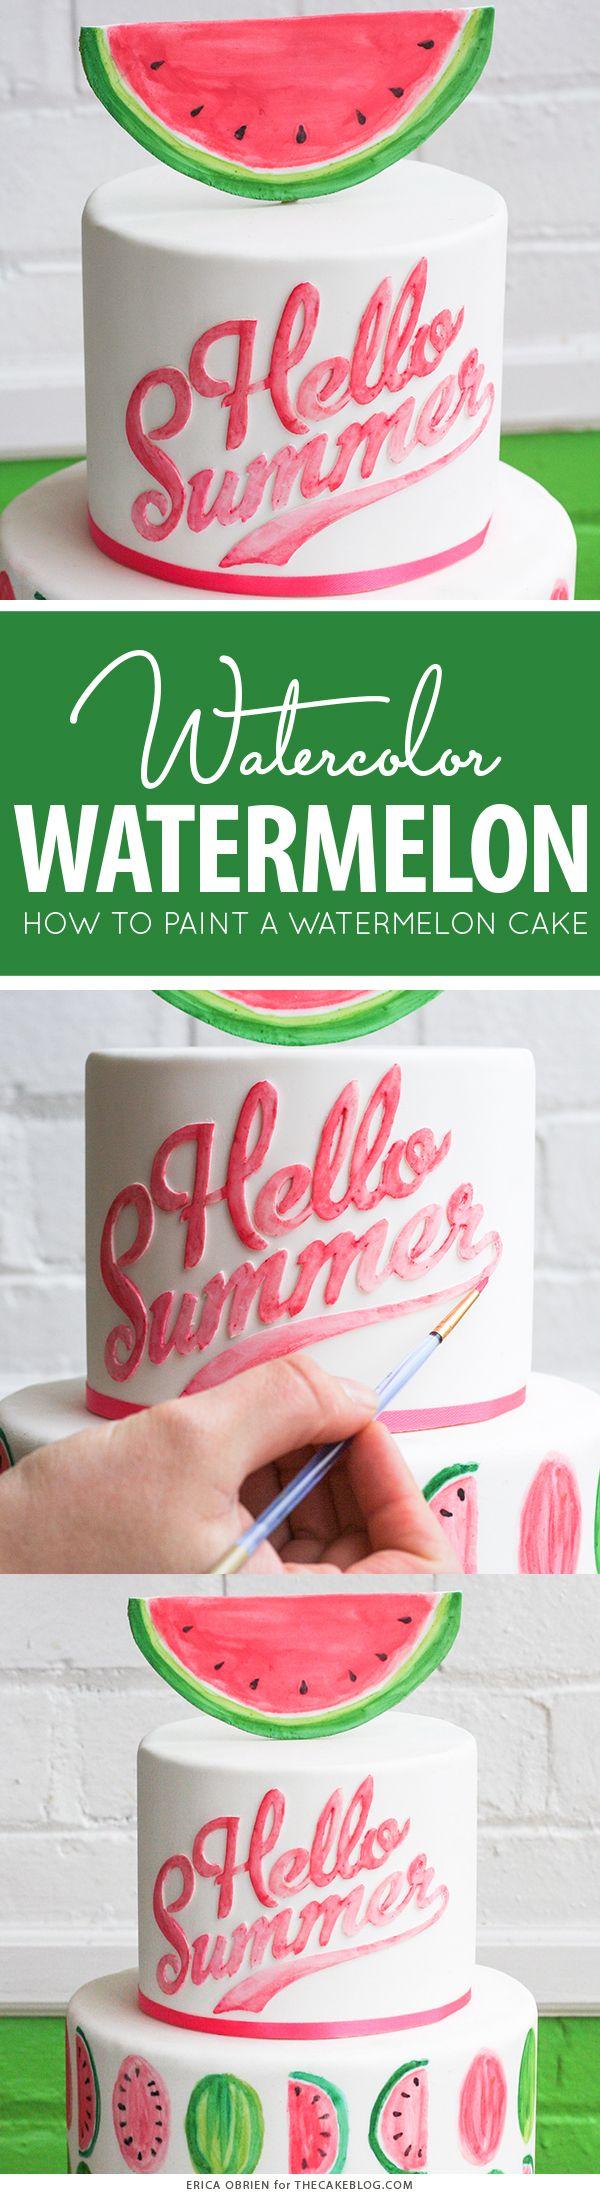 Wedding - Watermelon Cake